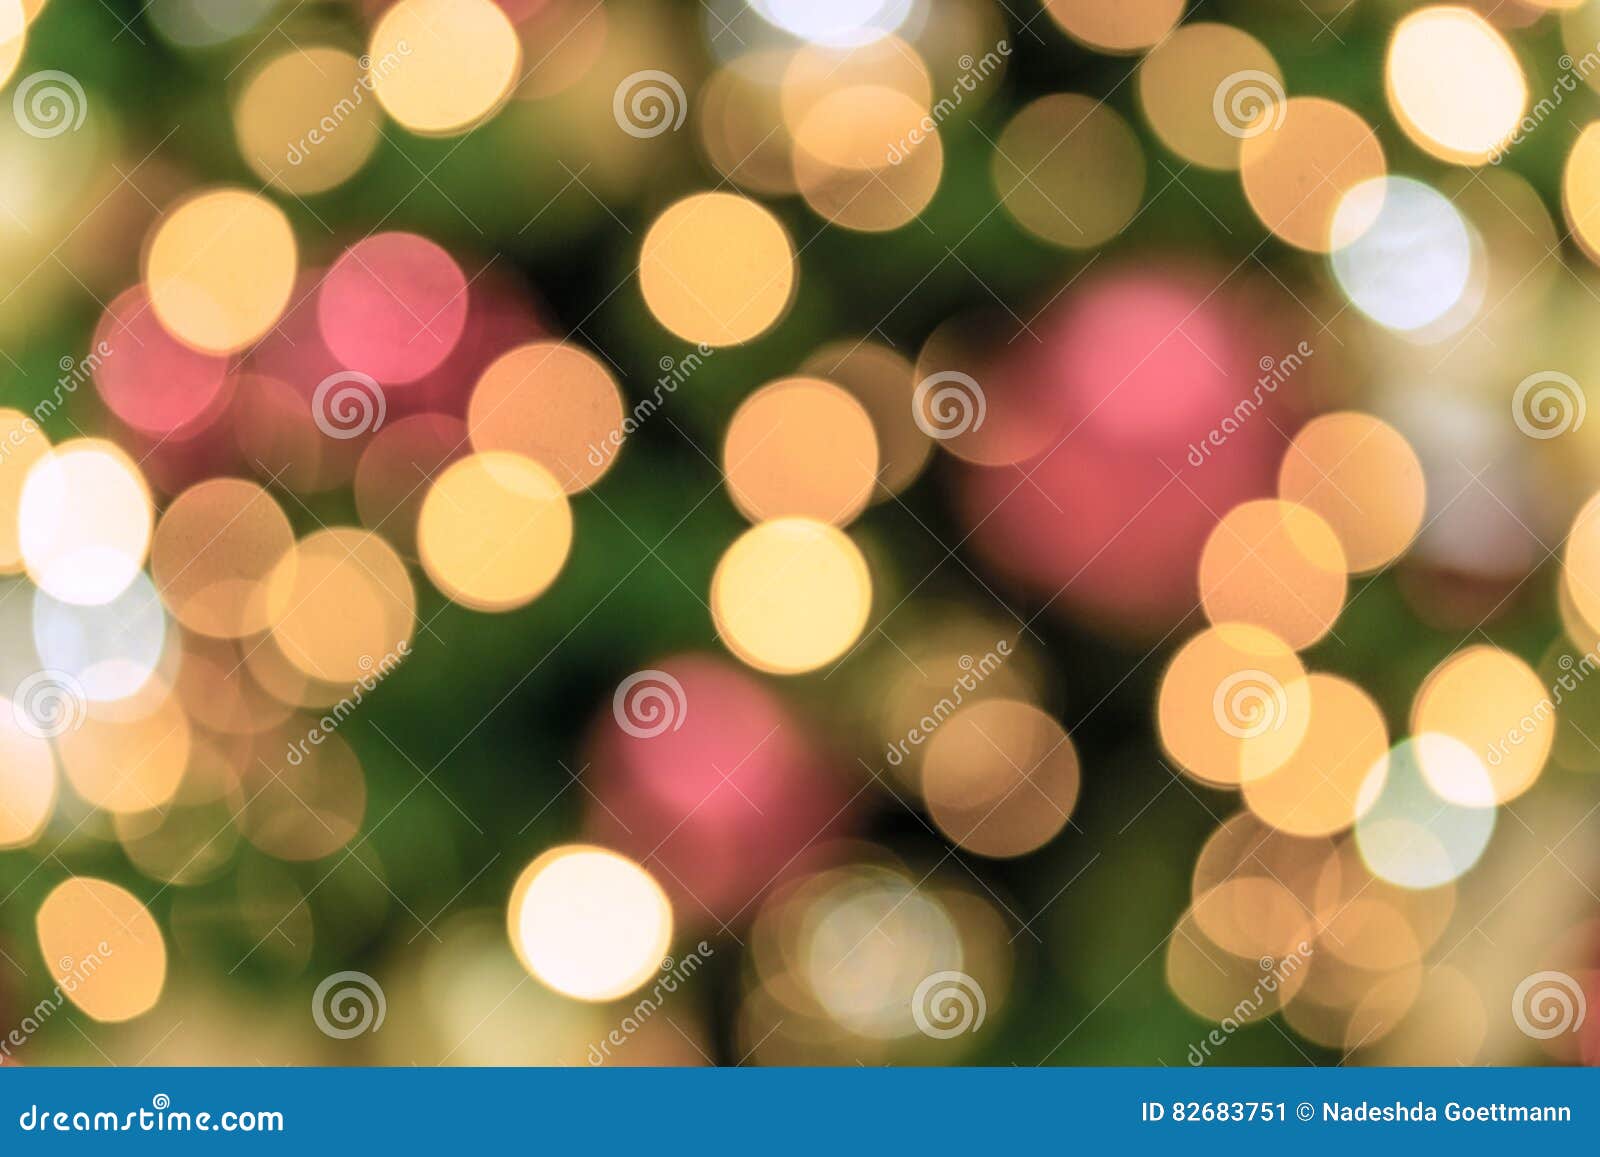 Christmas Tree Background. Bokeh Defocused Lights Stock Image - Image ...